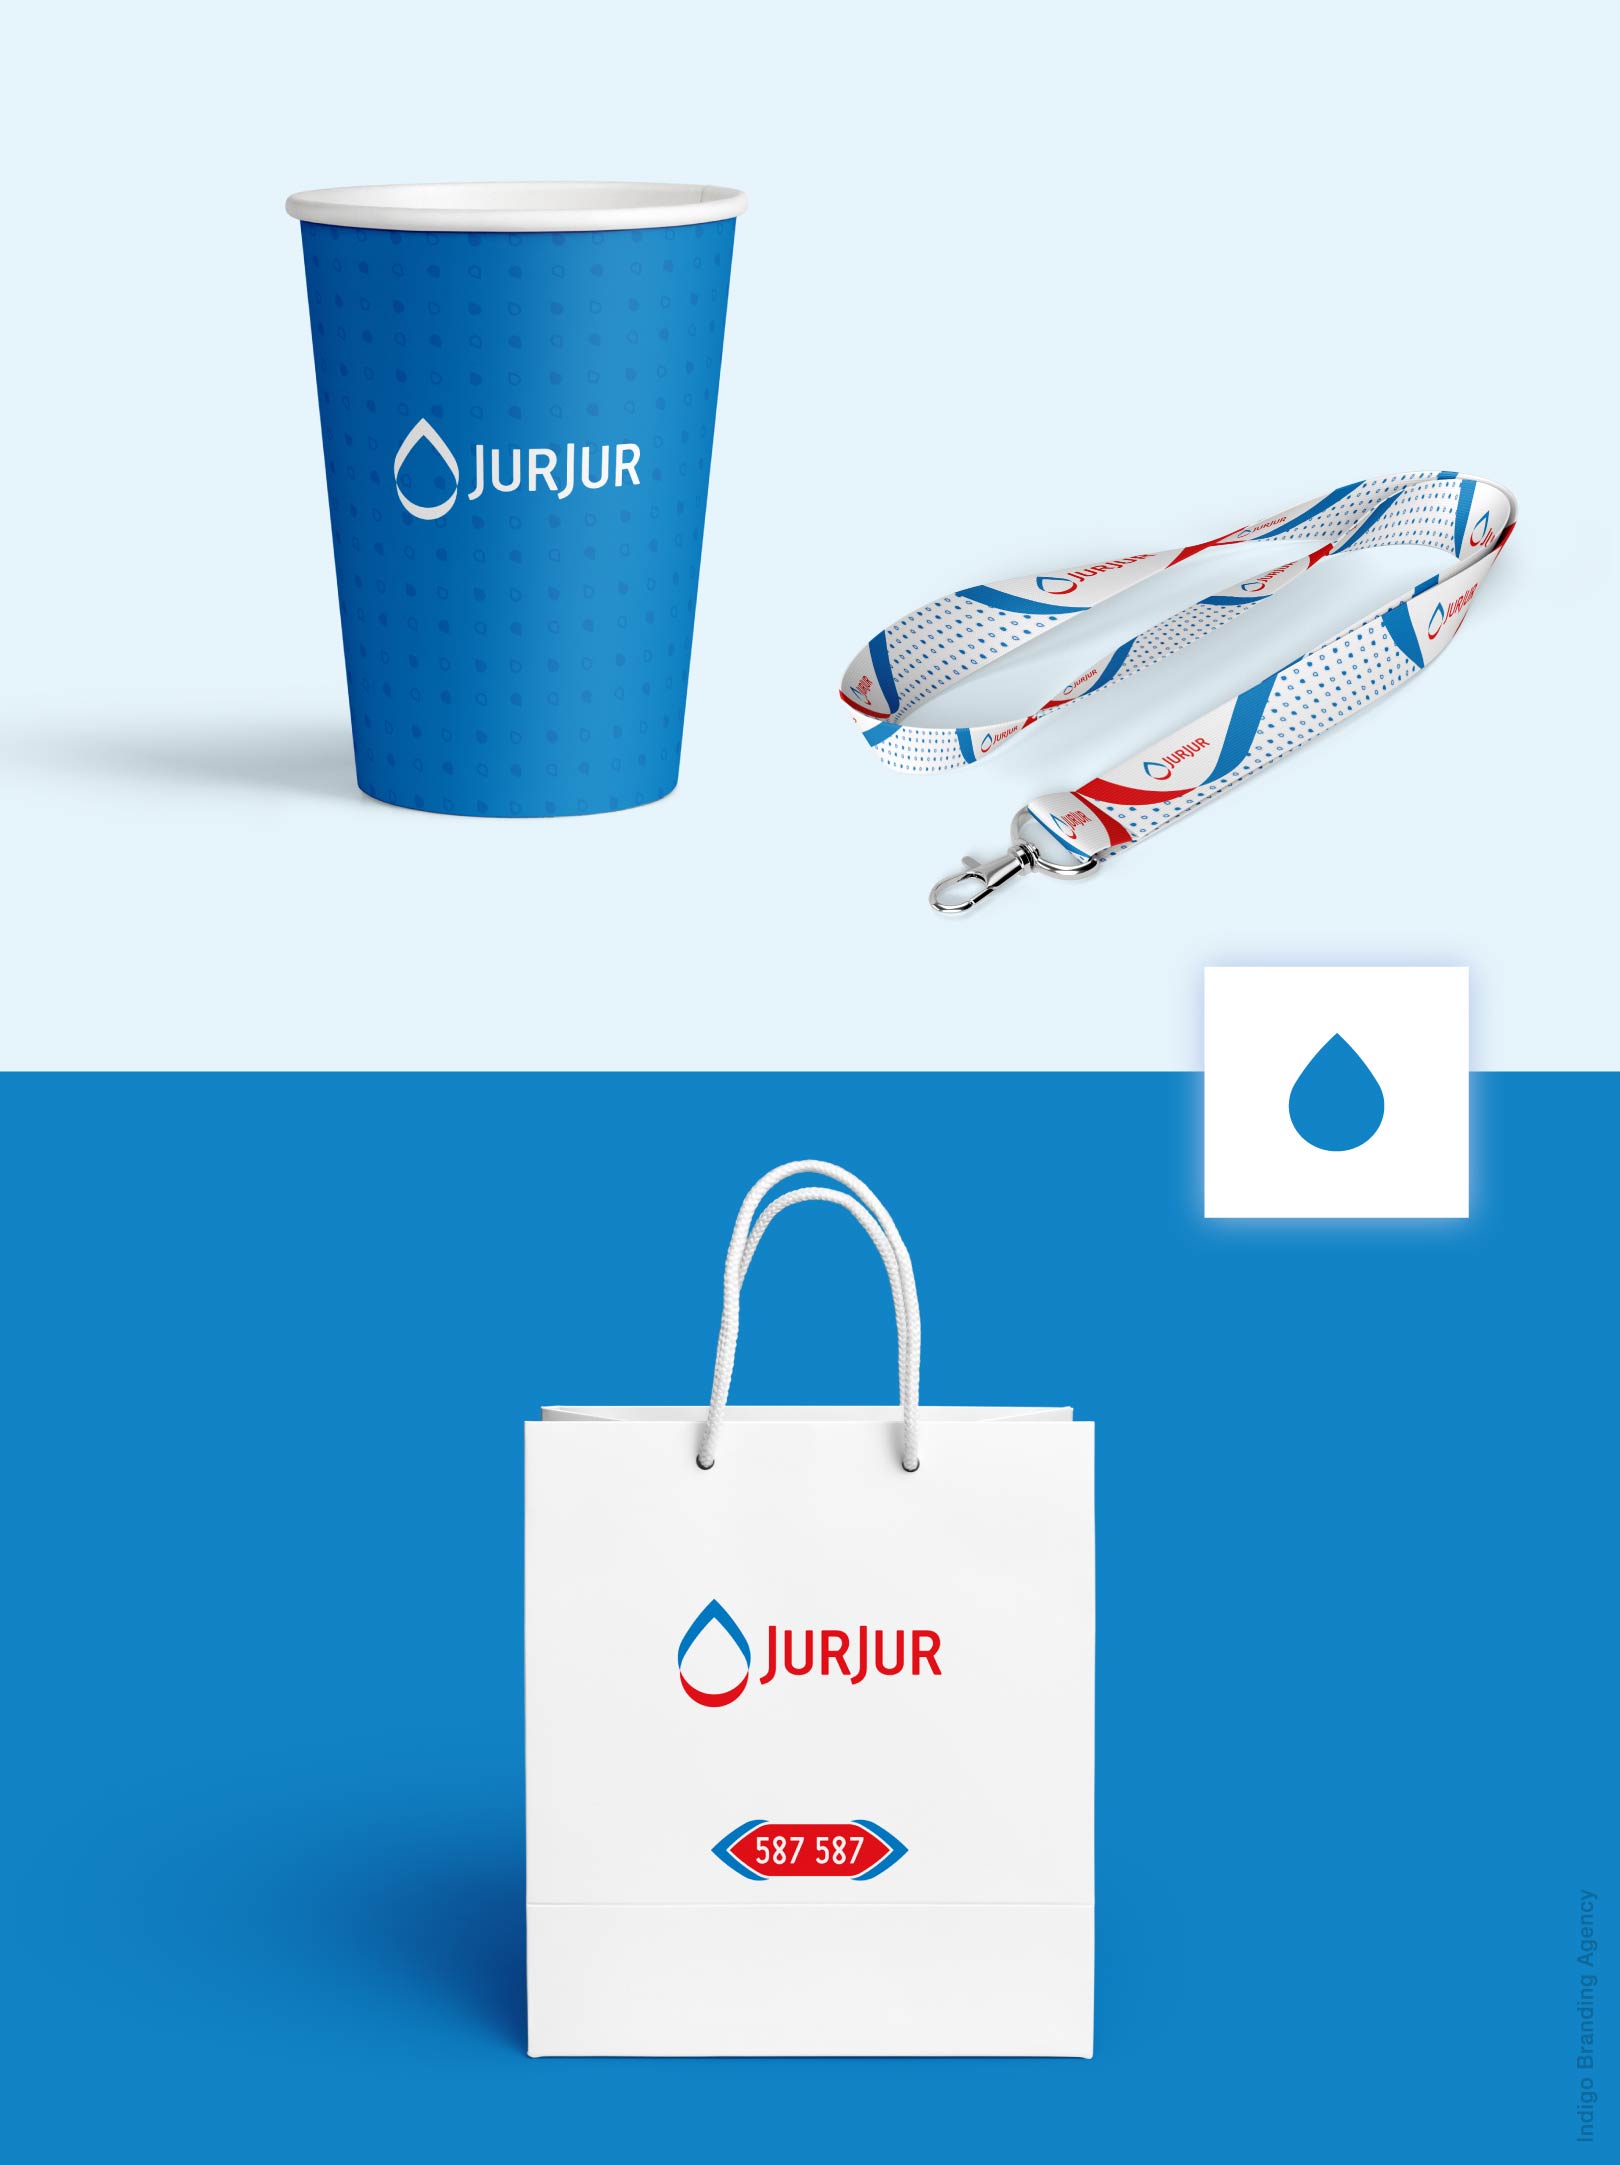 JurJur branding and logo design by Indigo branding